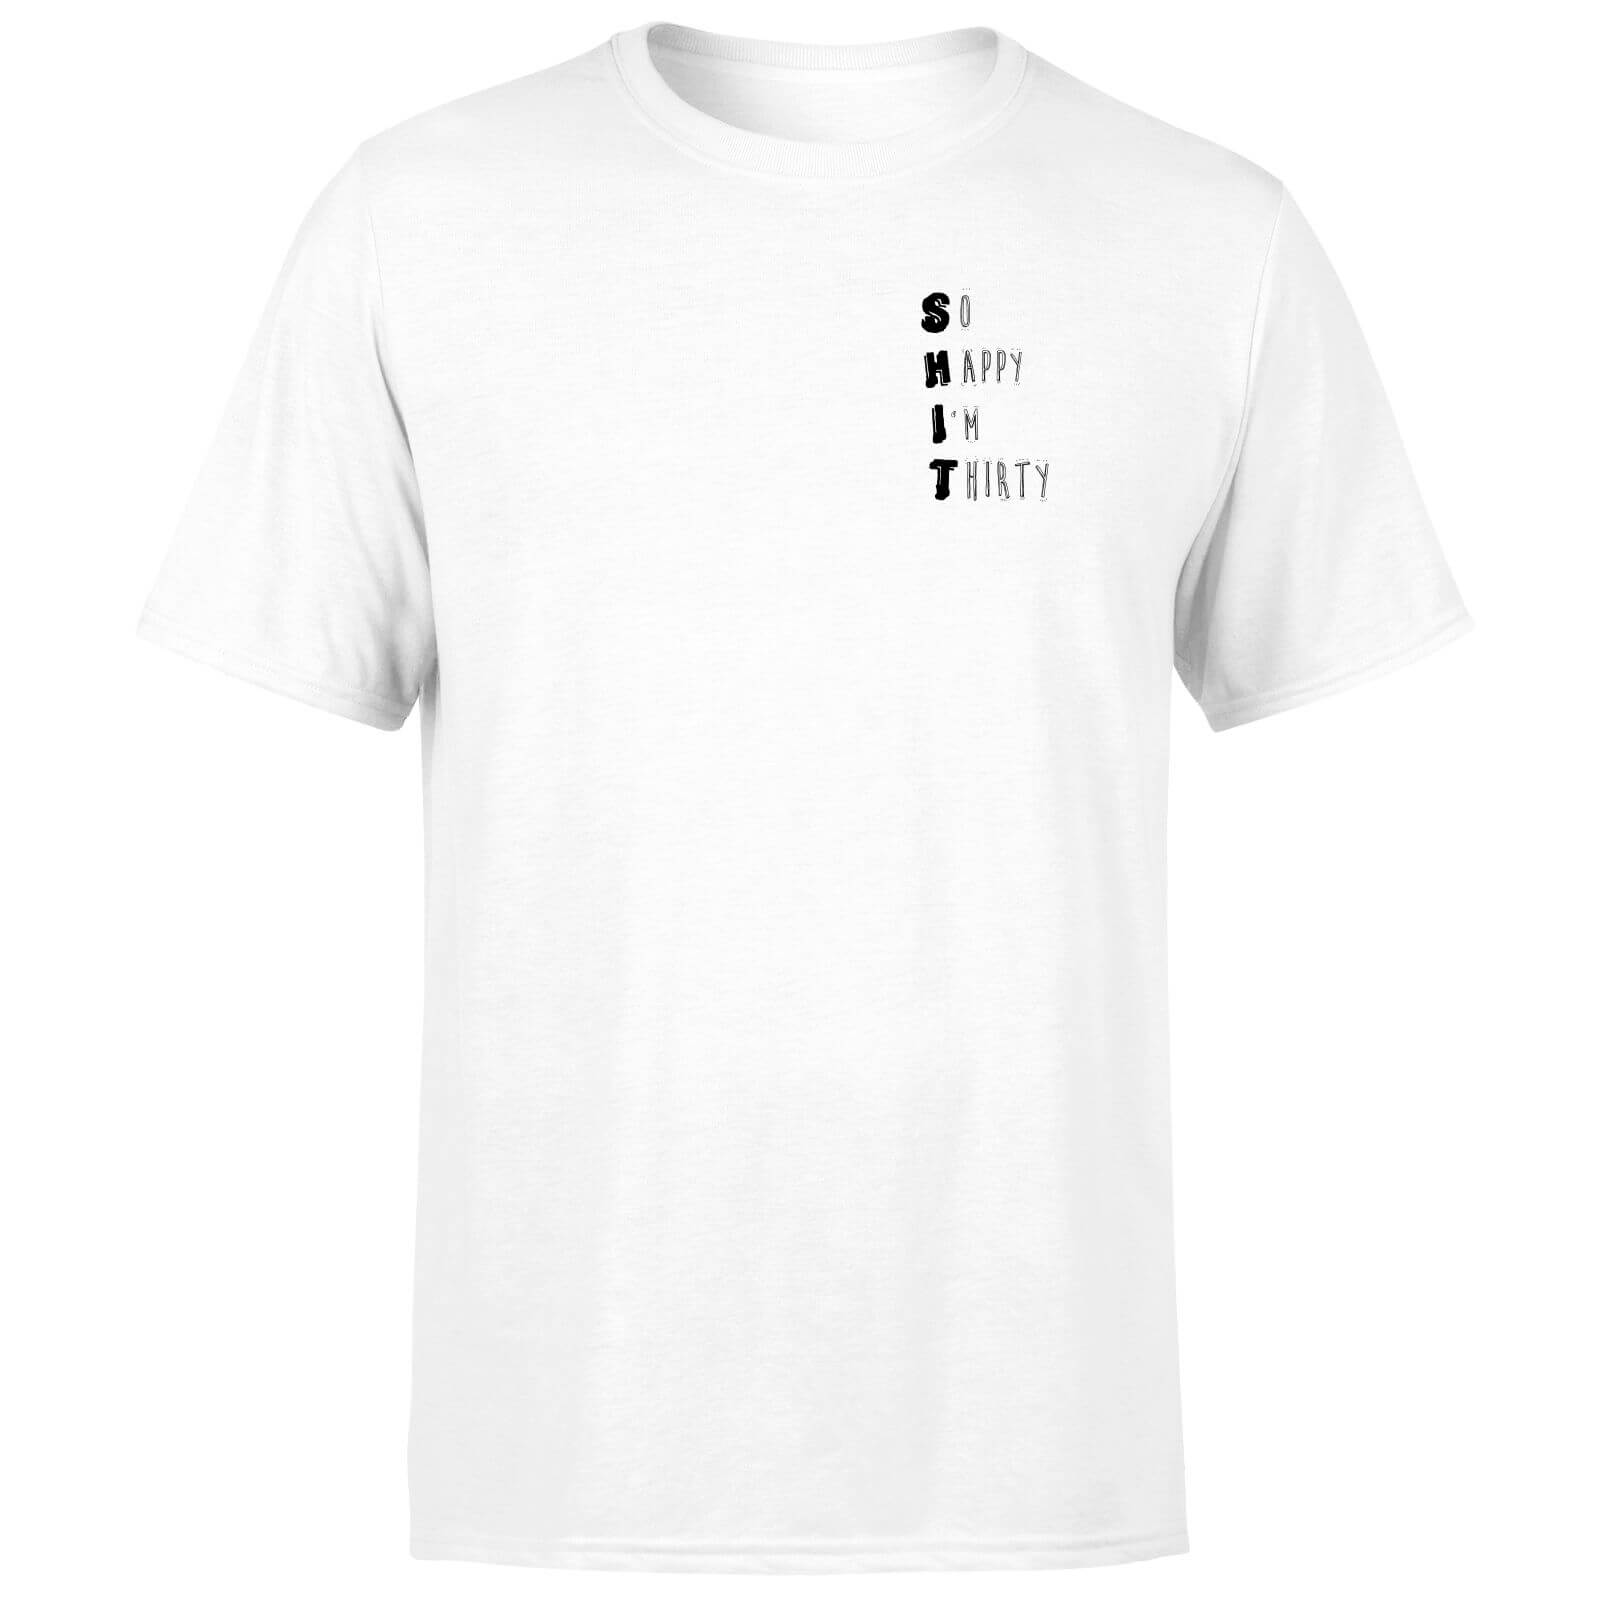 Shit Thirty Men's T-Shirt - White - XS - White